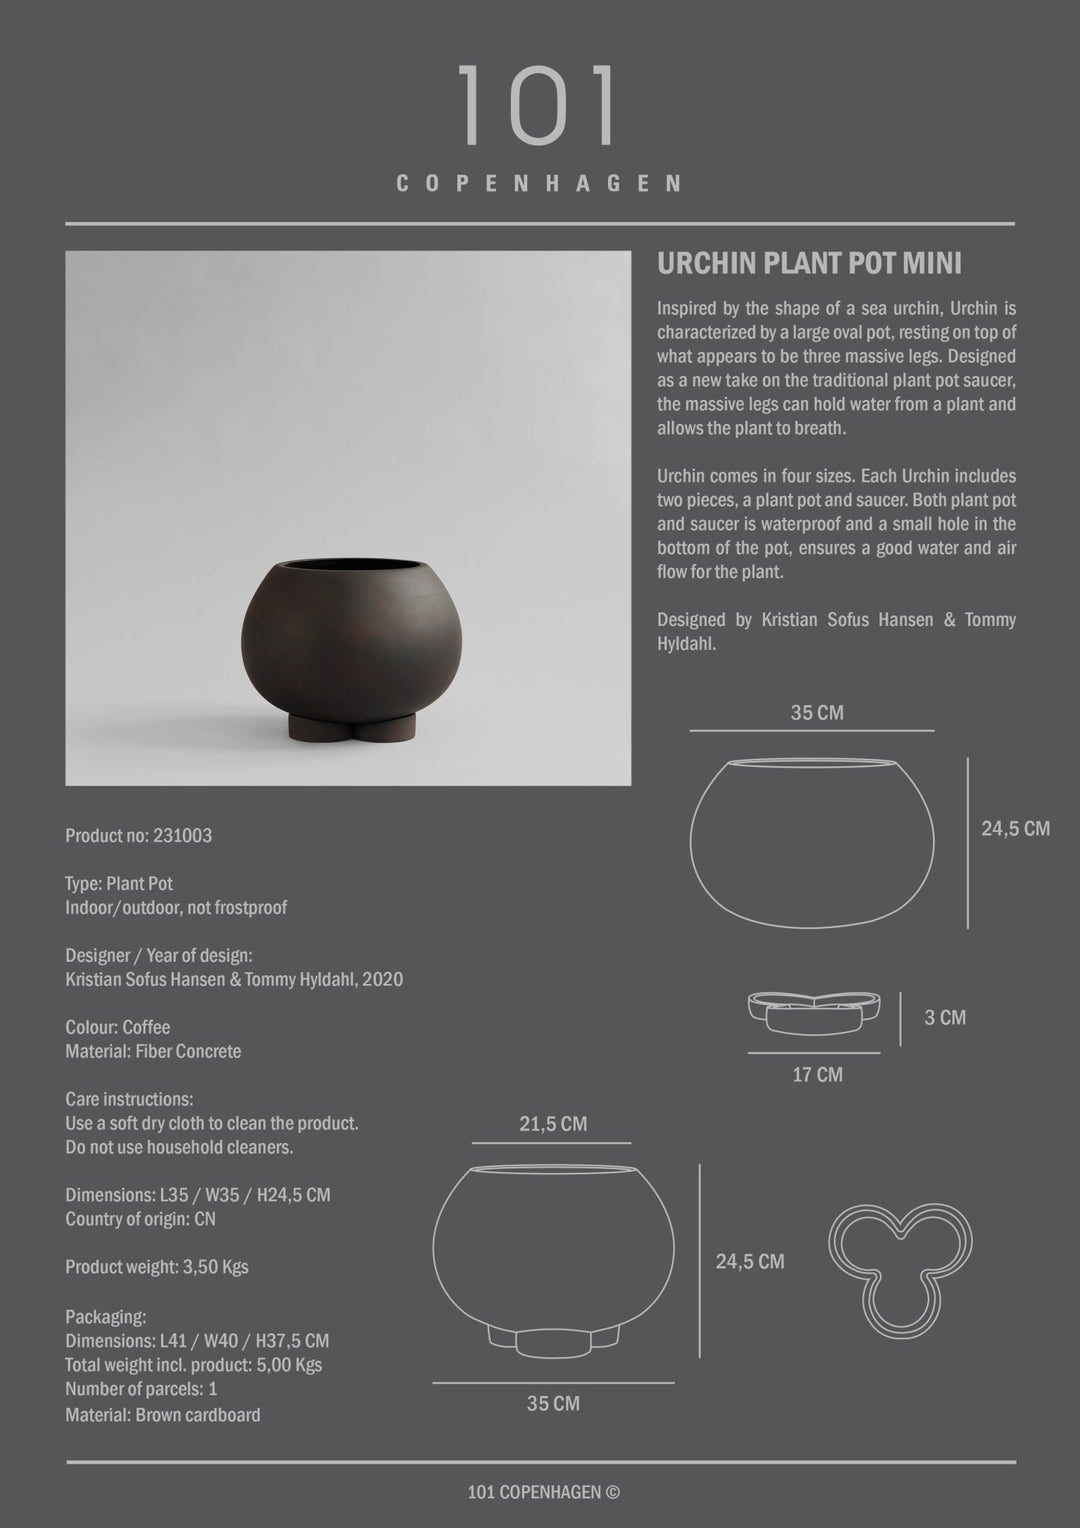 101 Copenhagen Urchin Plant Pot - Coffee - $85.00 - $795.00